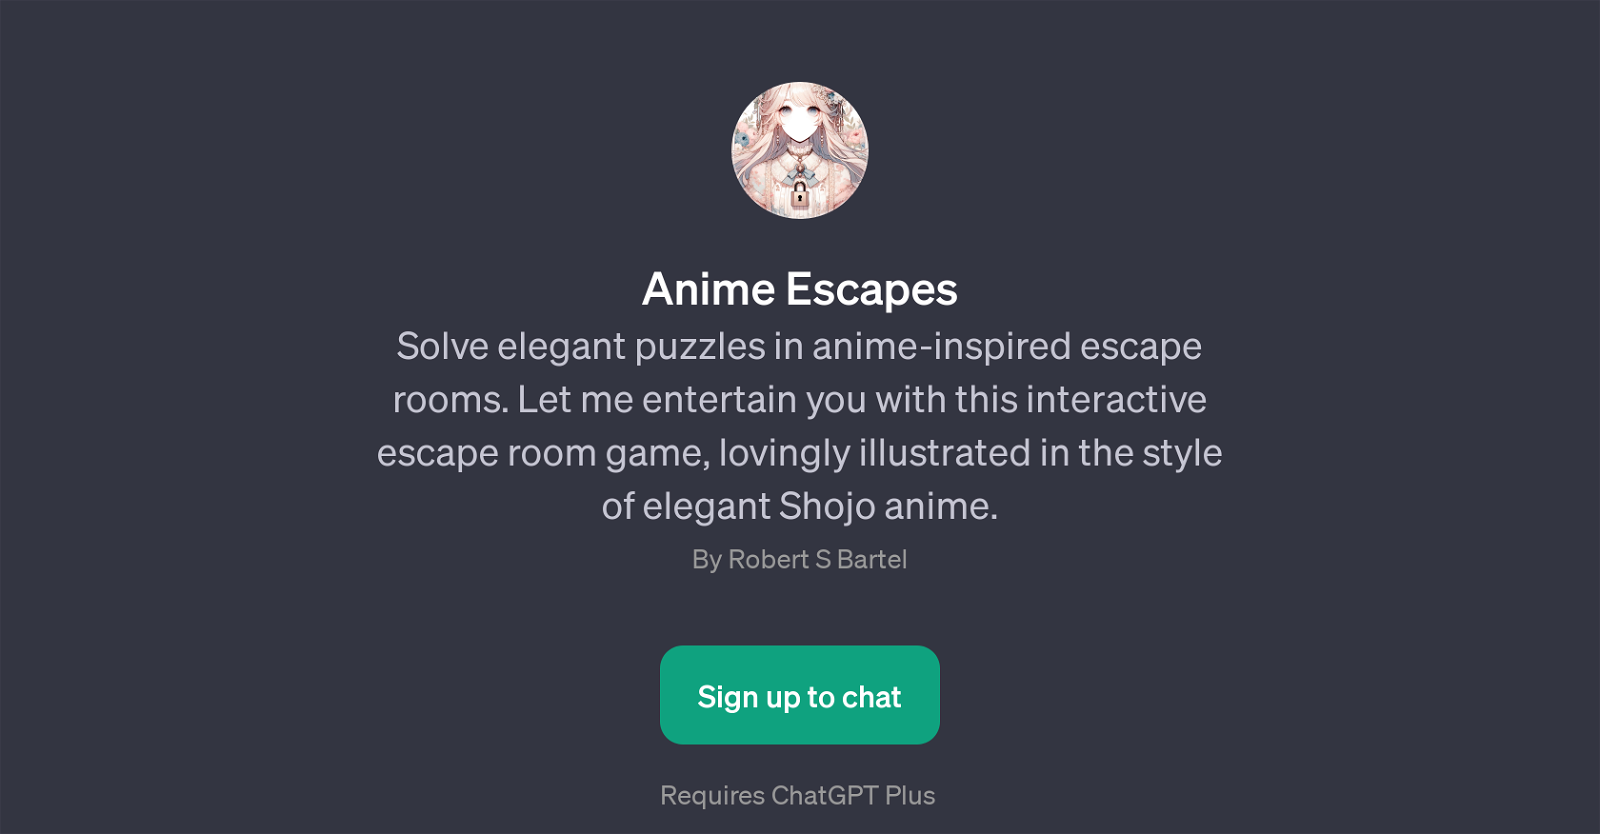 Anime Escapes website